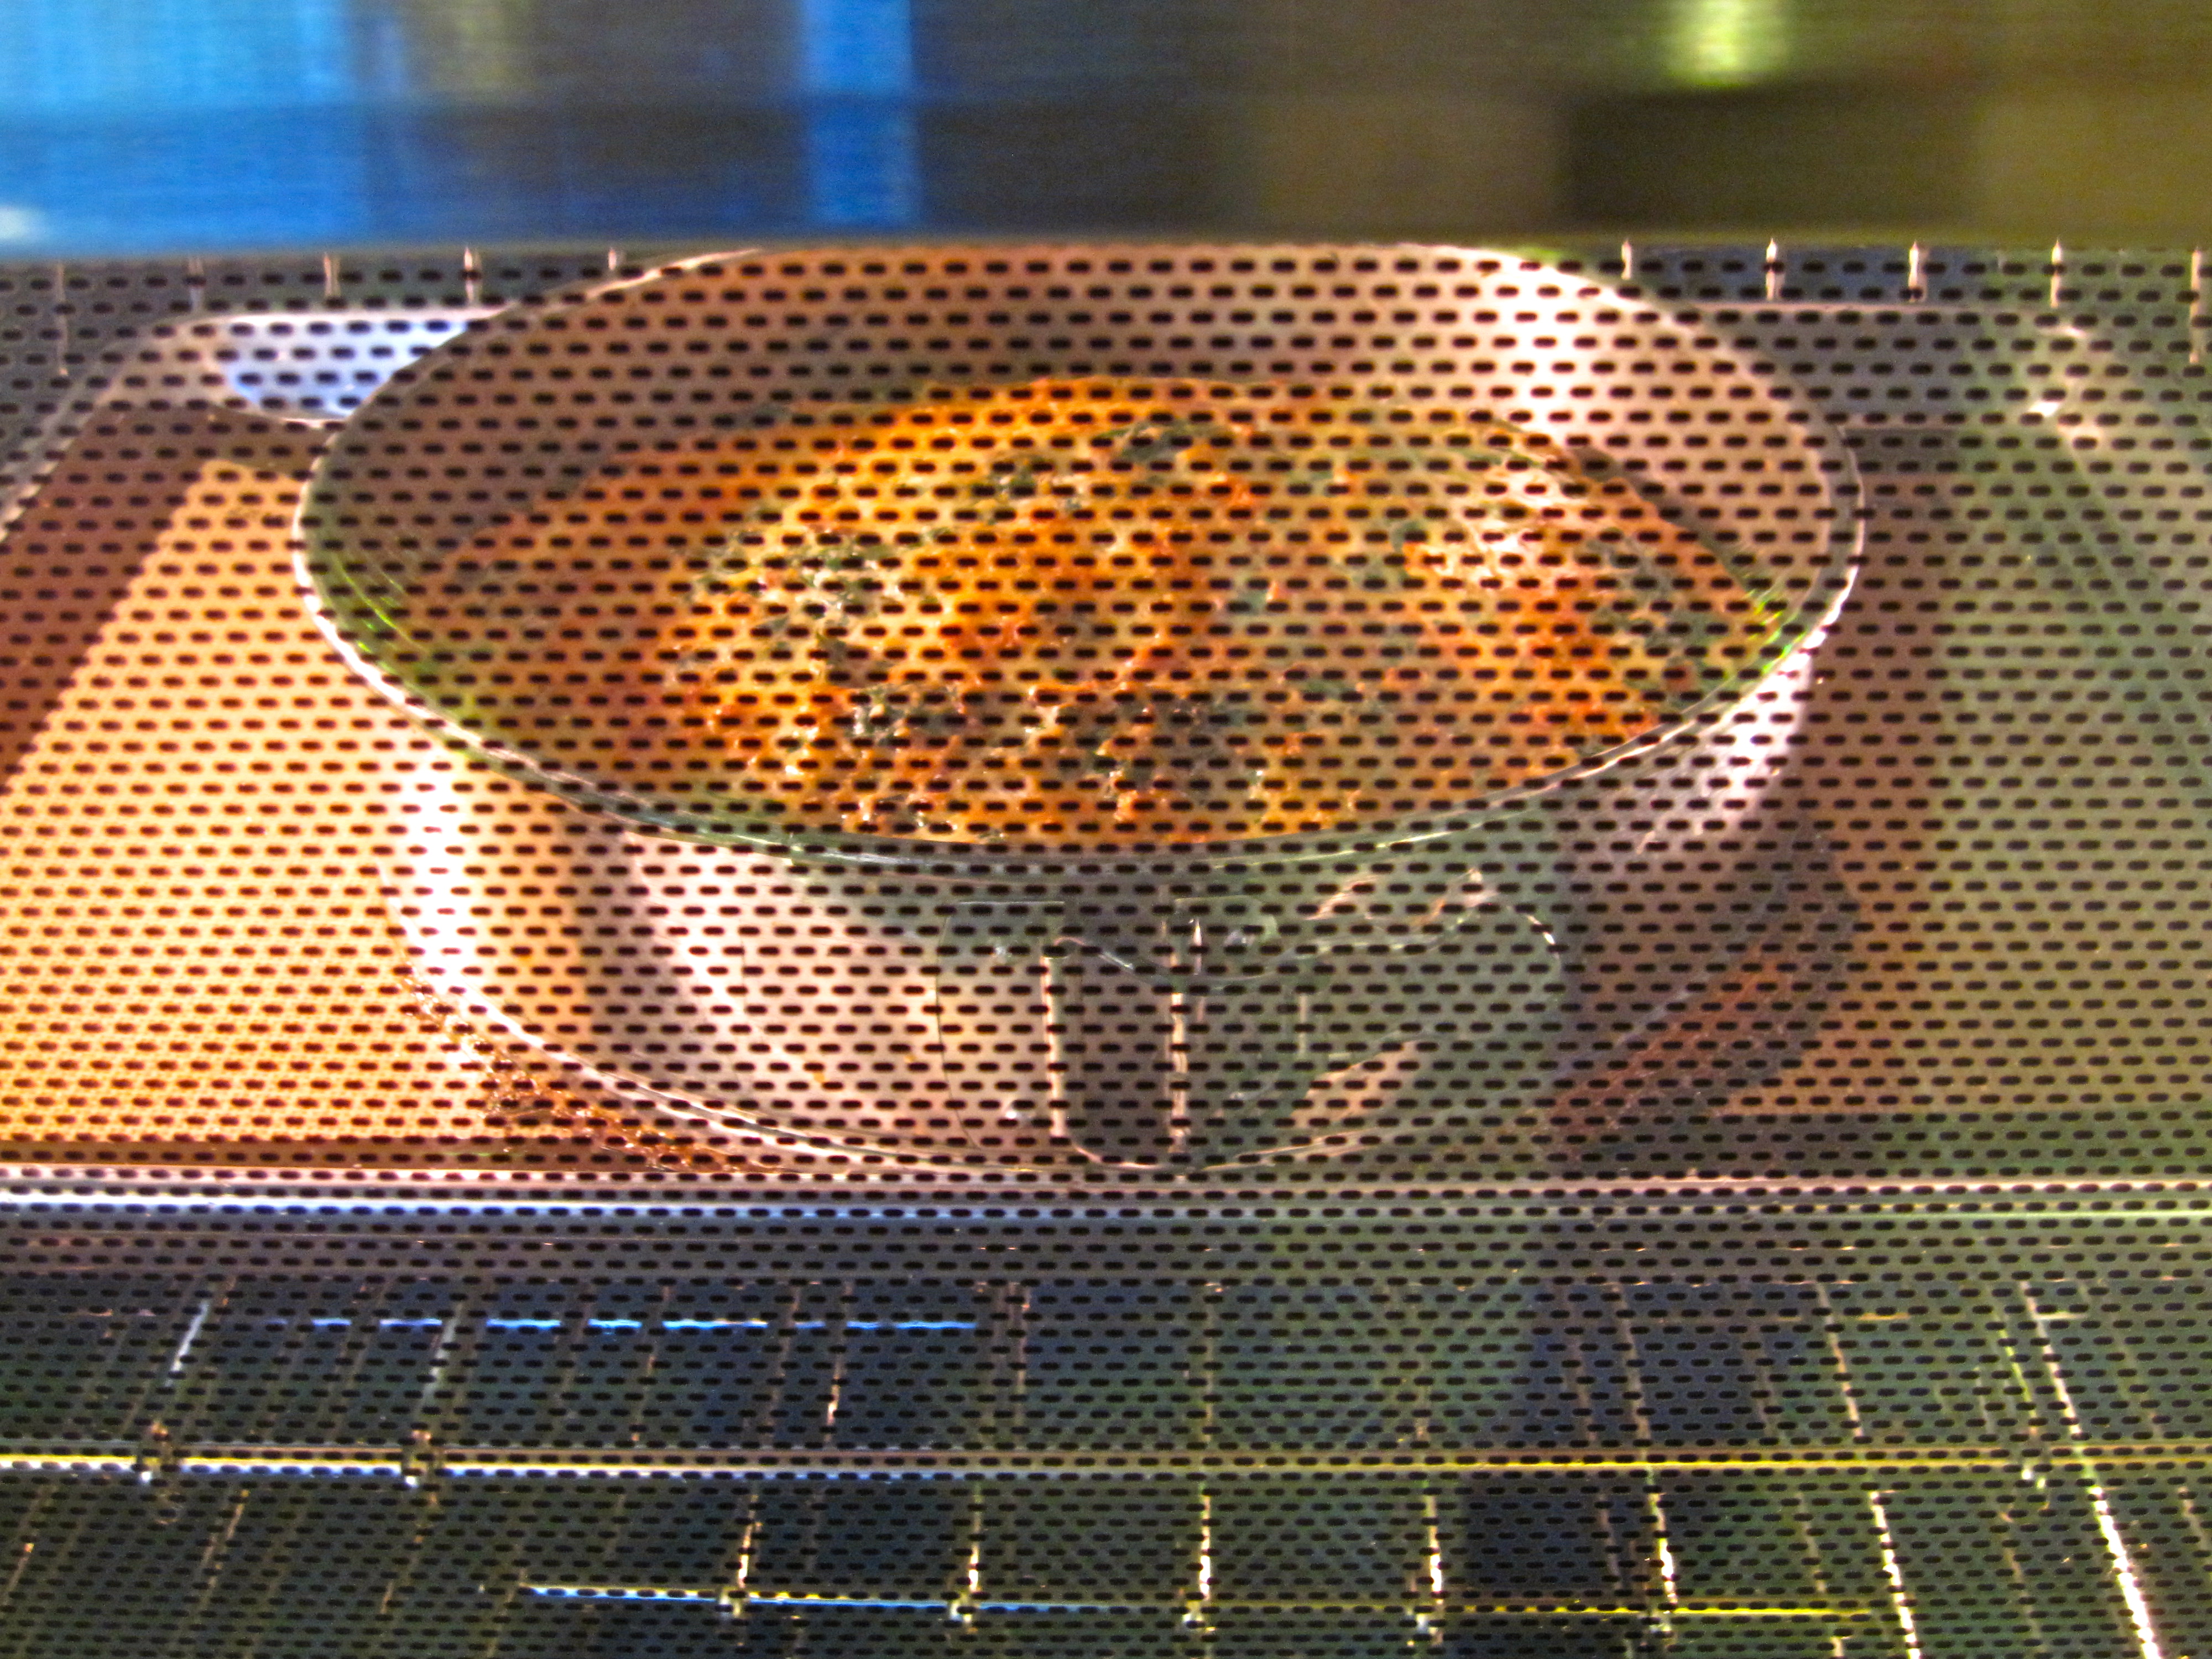 Quiche baking in oven.